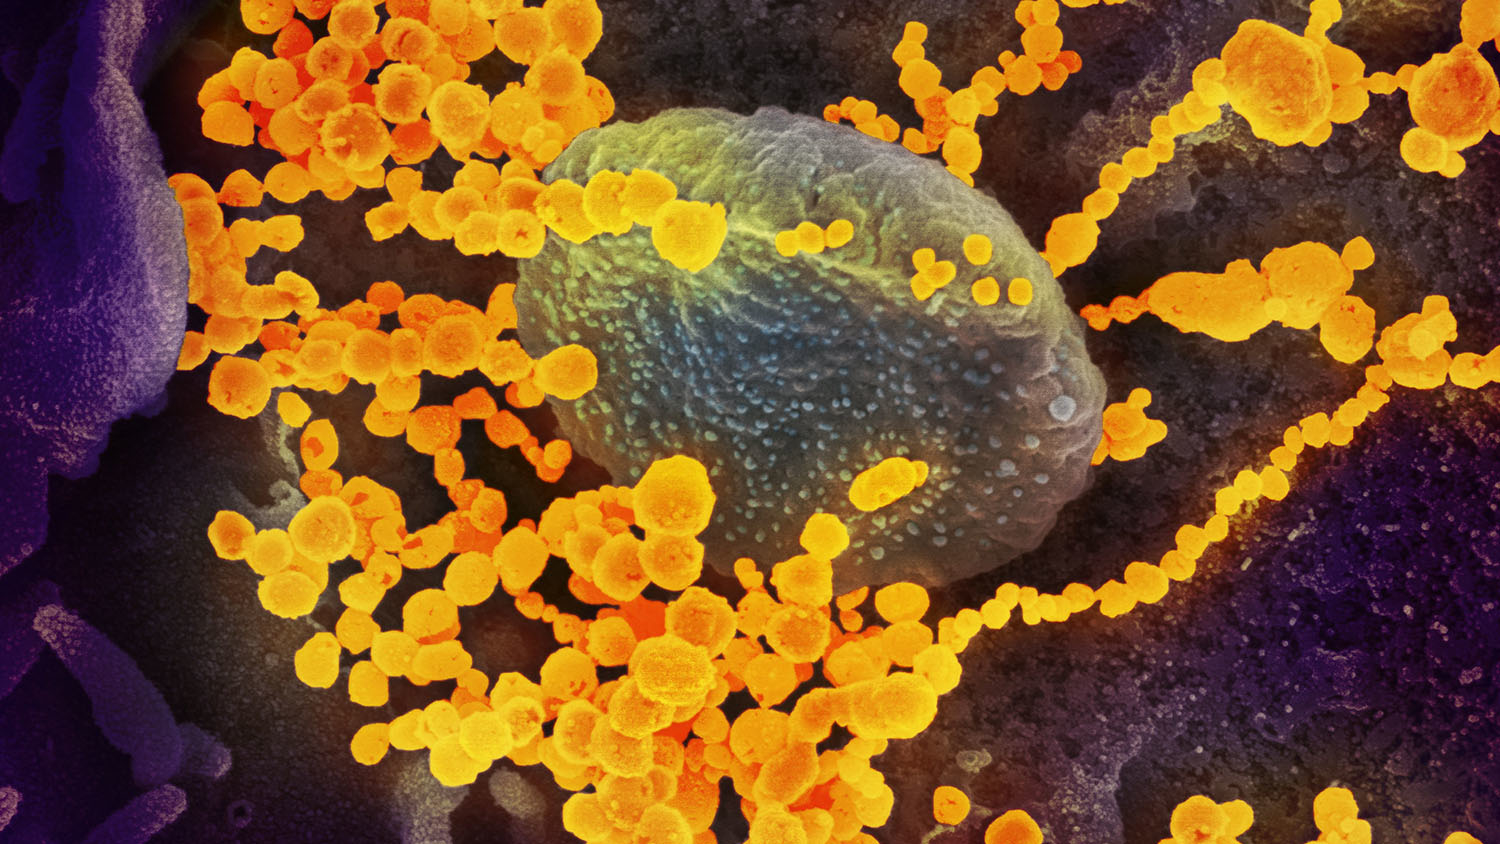 microscopy image of SARS-CoV-2 viruses